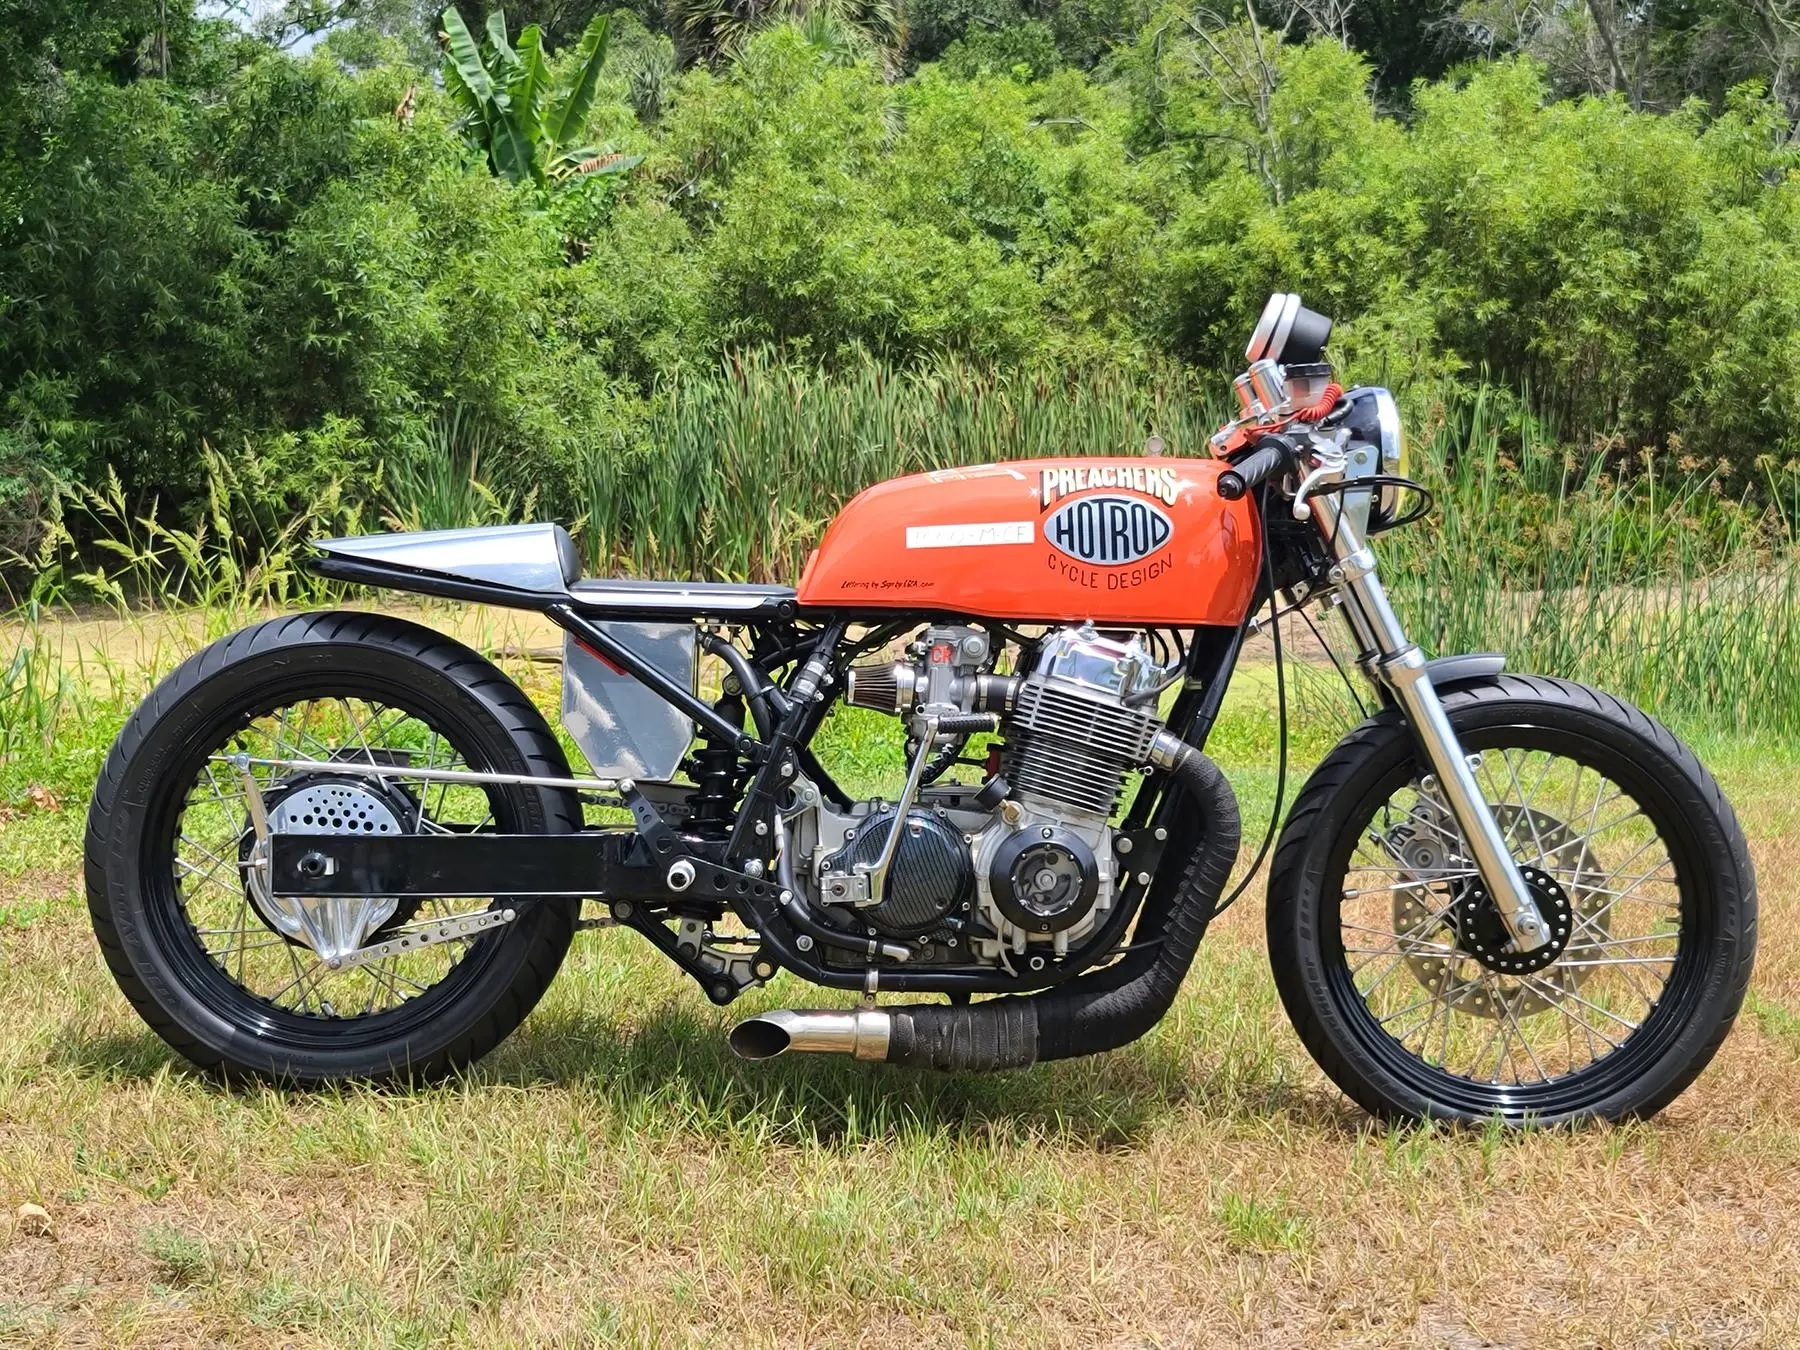 1971 Honda CB750 by Preachers Hot Rod Cycle Design